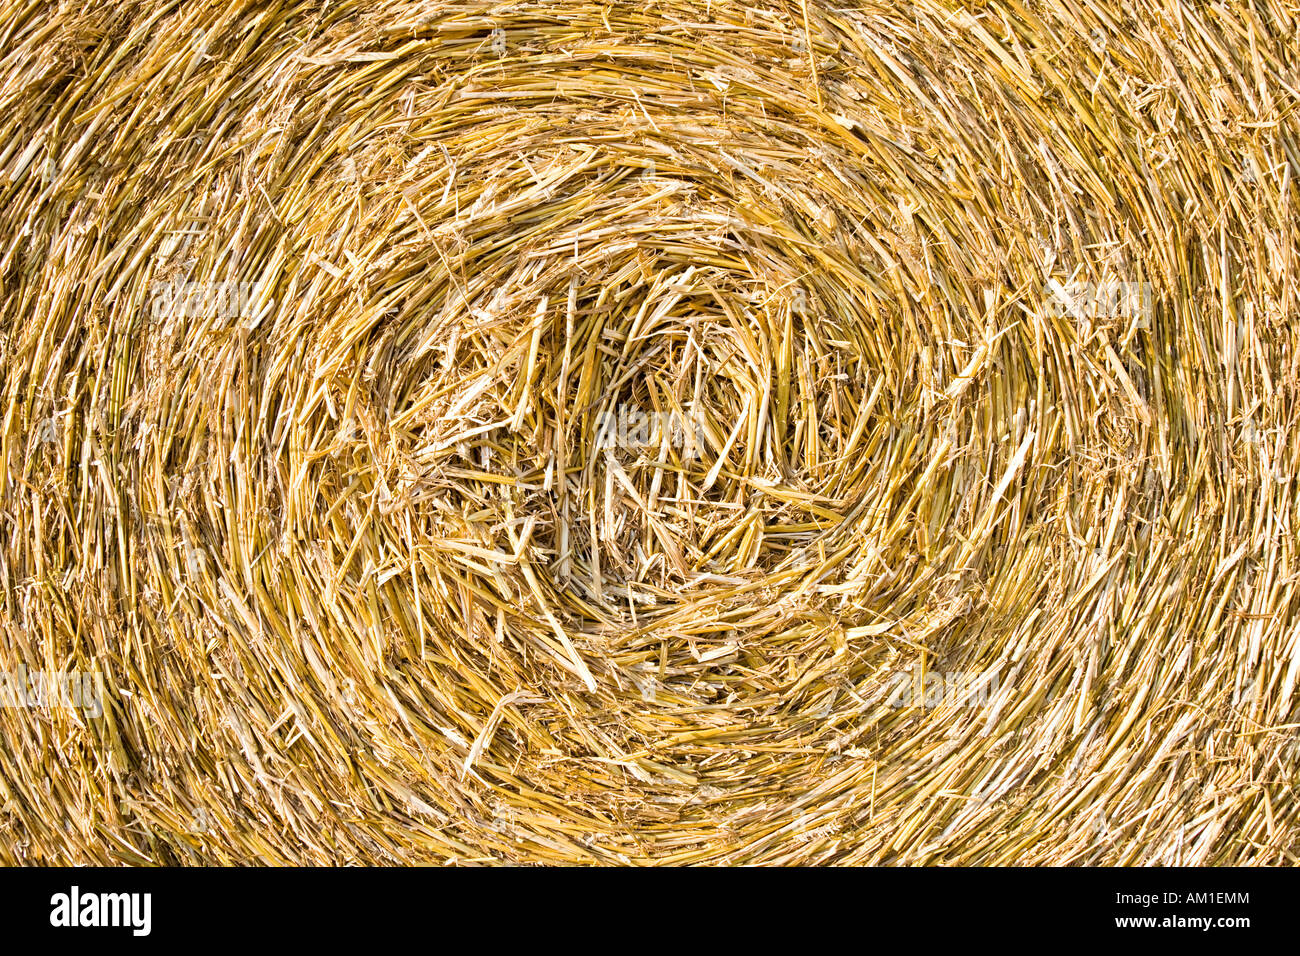 Bale of straw Stock Photo